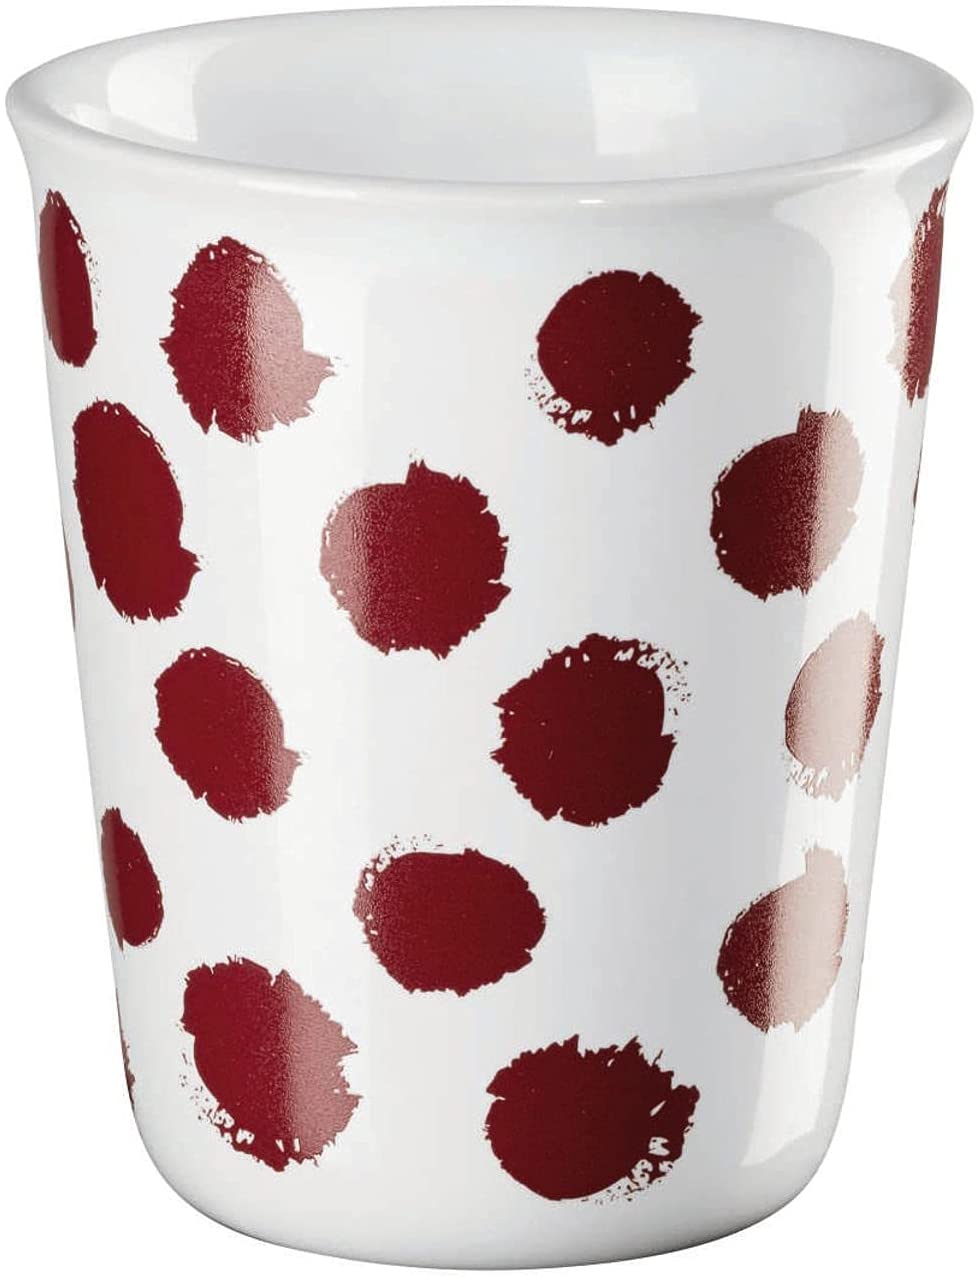 ASA - cup - espresso - white / red / polka dots - porcelain - diameter 6.5 cm x height 7 cm - capacity: 0.1 l